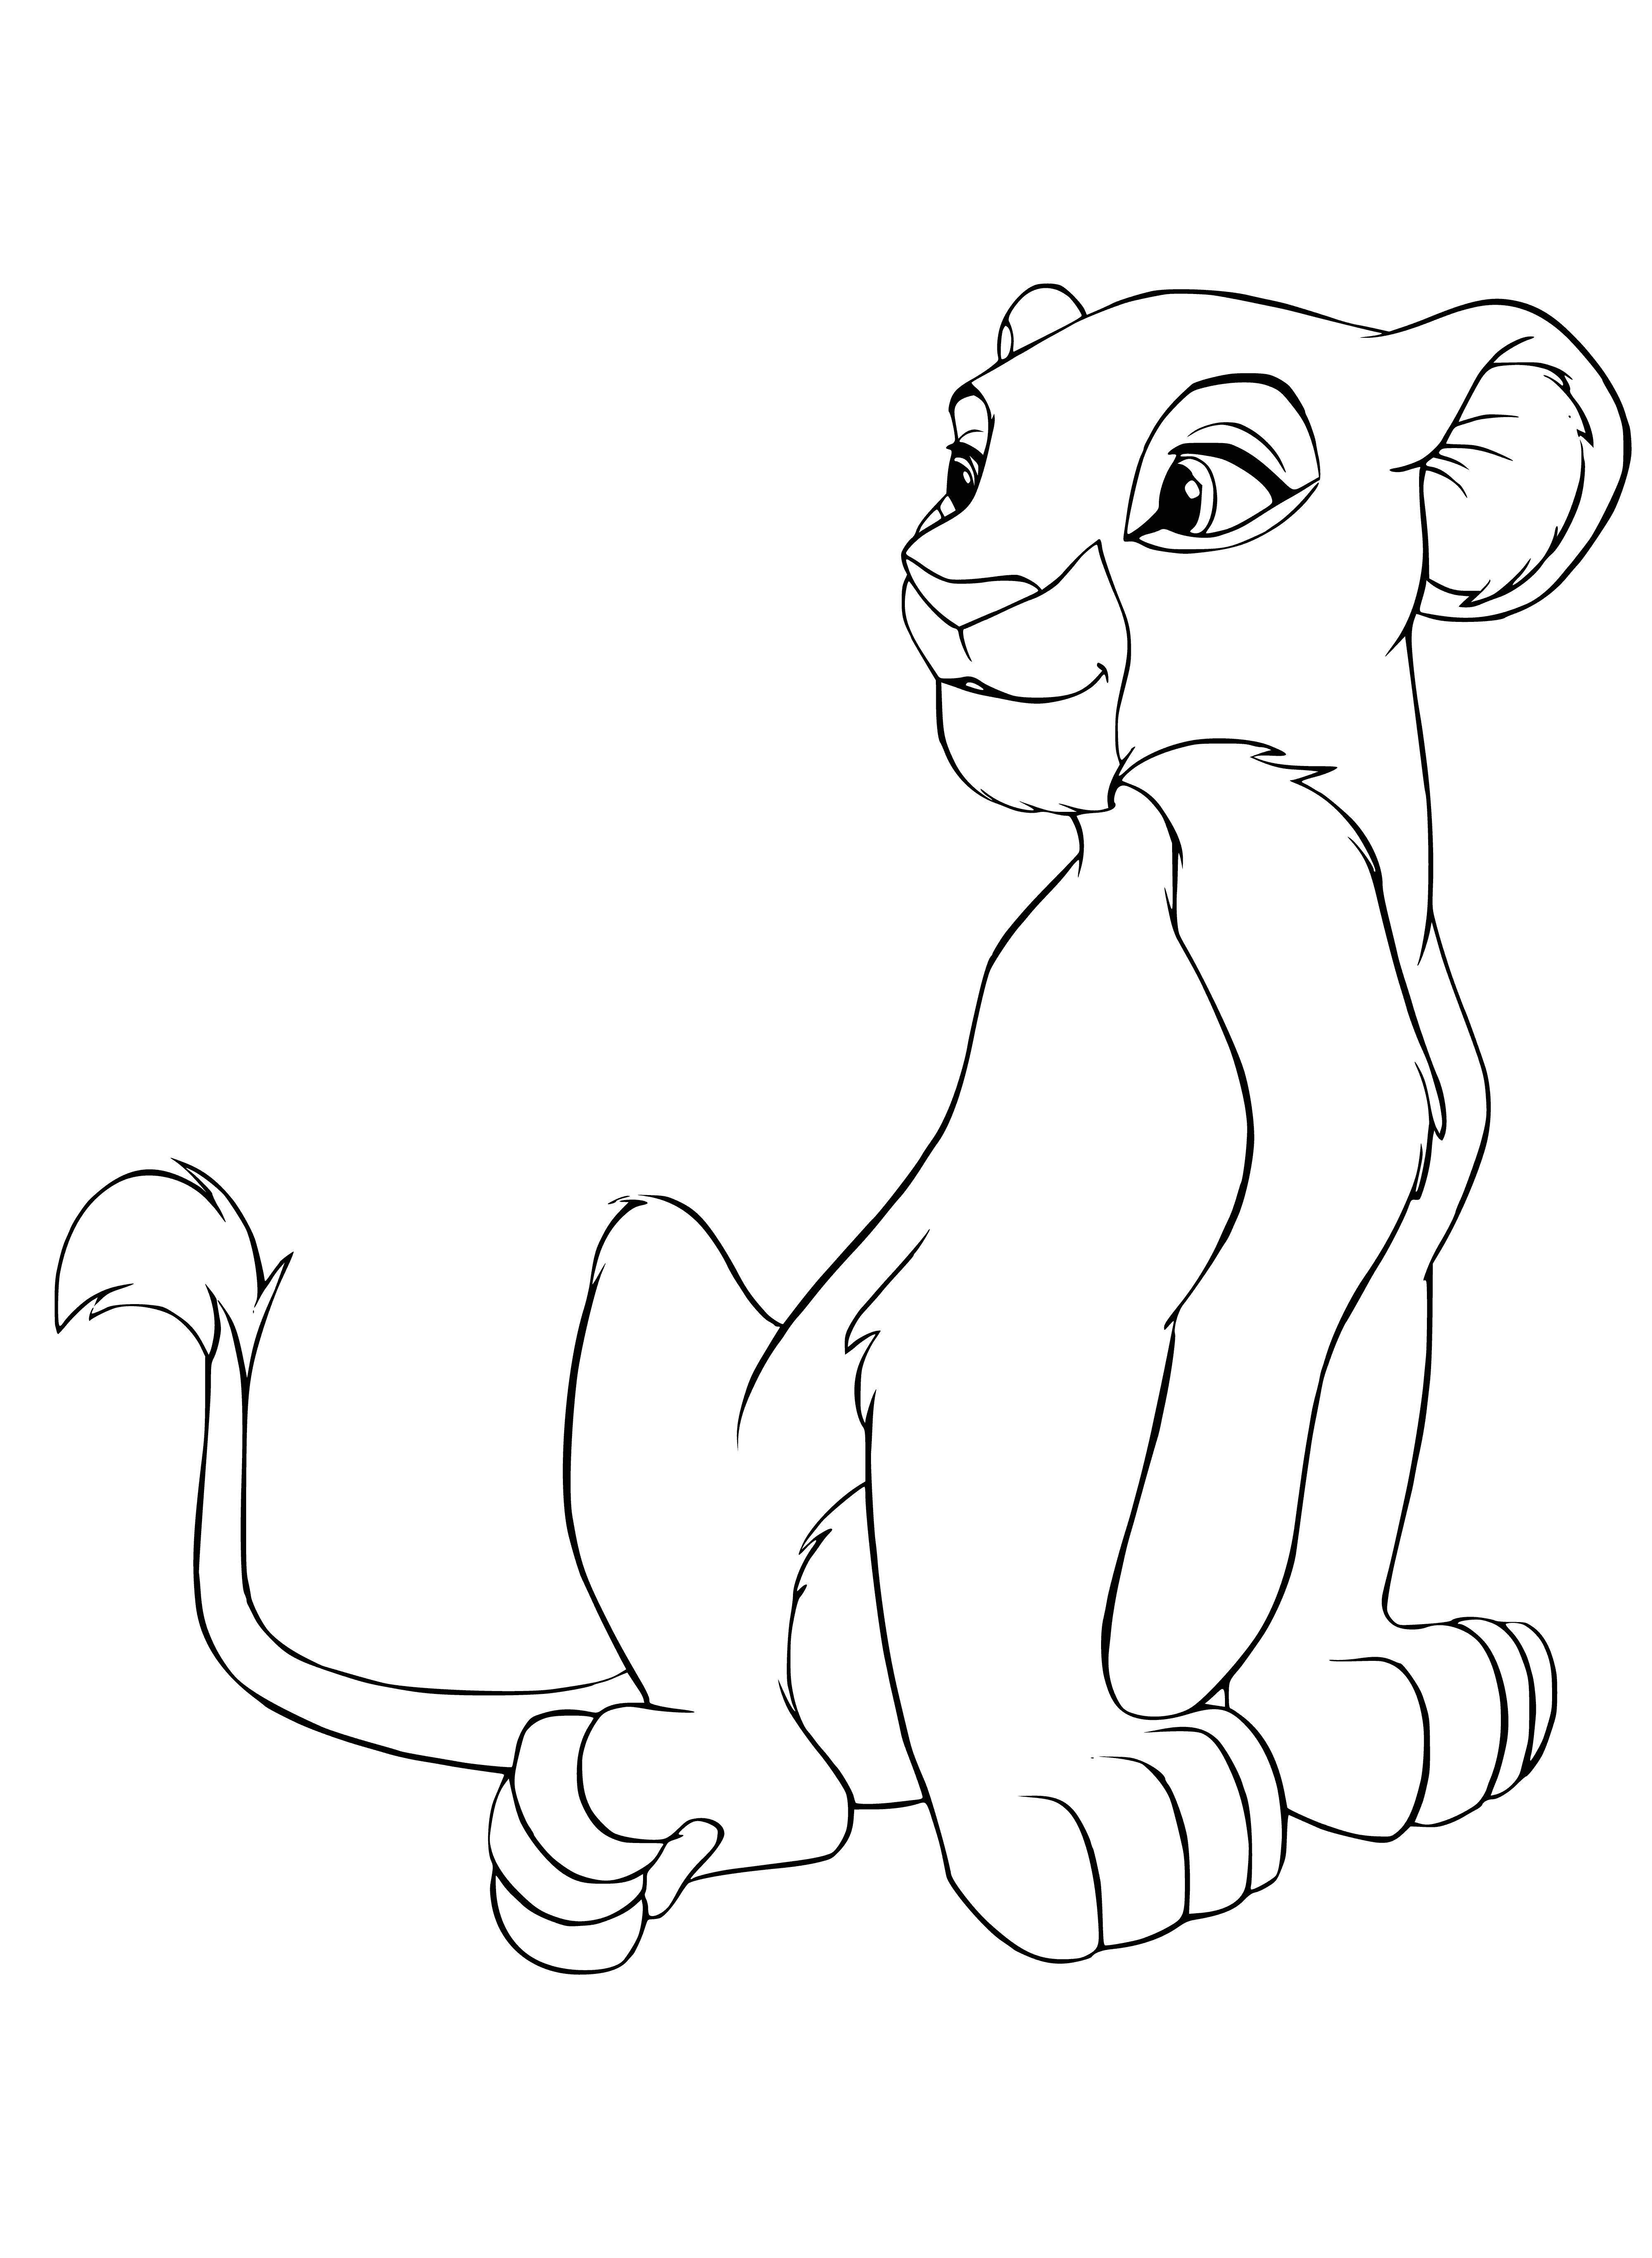 Nala, Simba's girlfriend coloring page